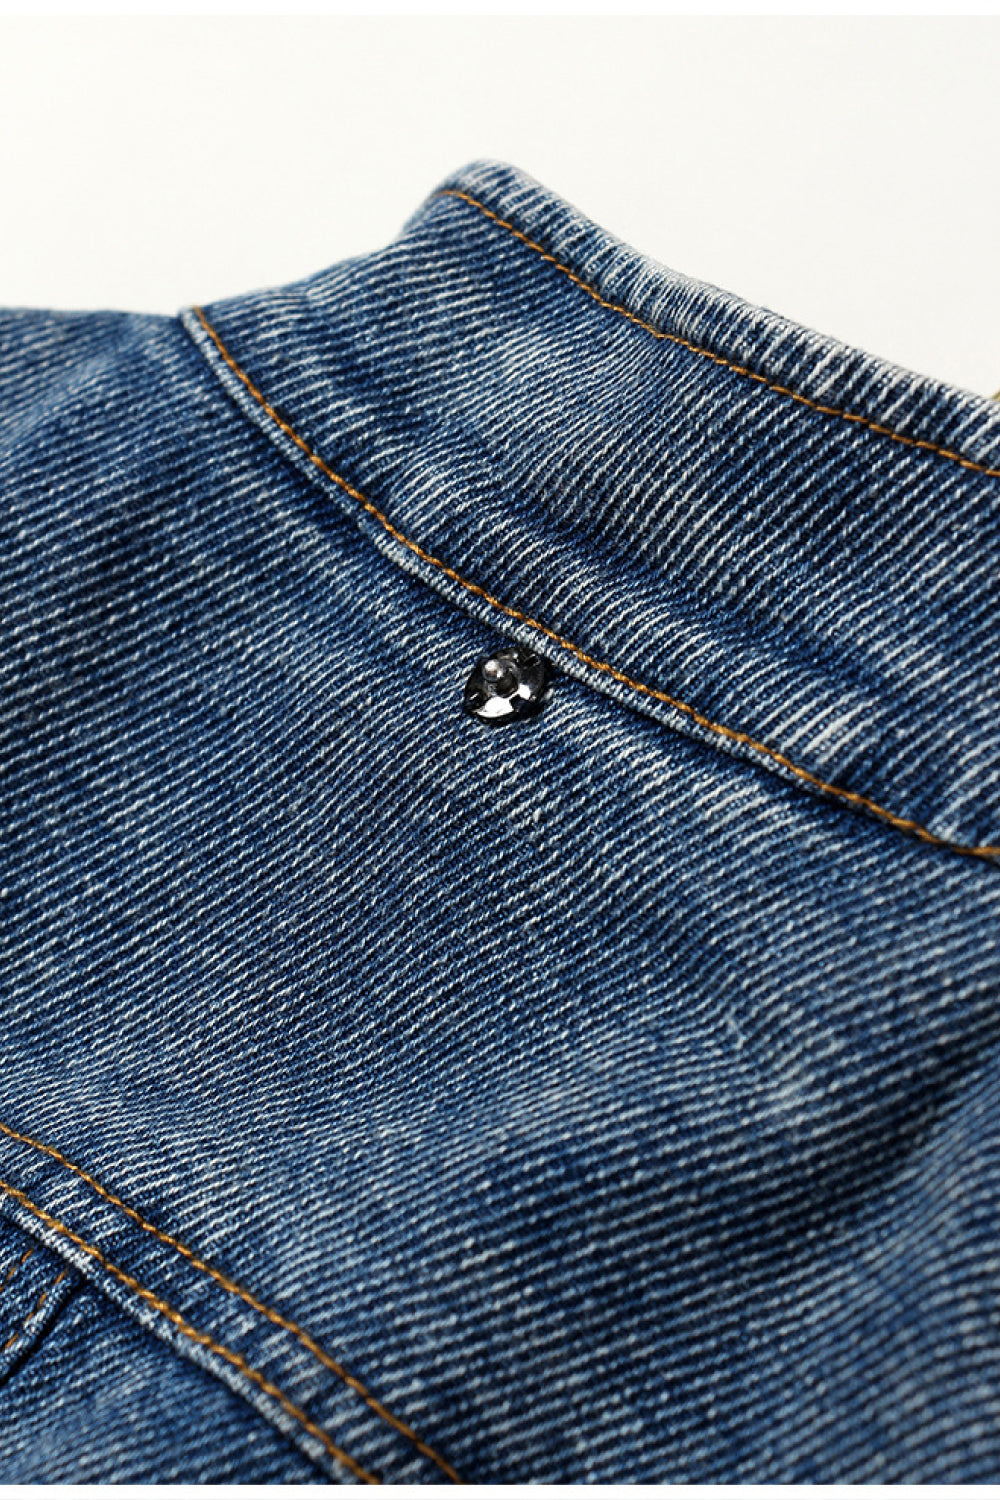 GAWQO Fringe Detail Cropped Jacket and Denim Vest Set